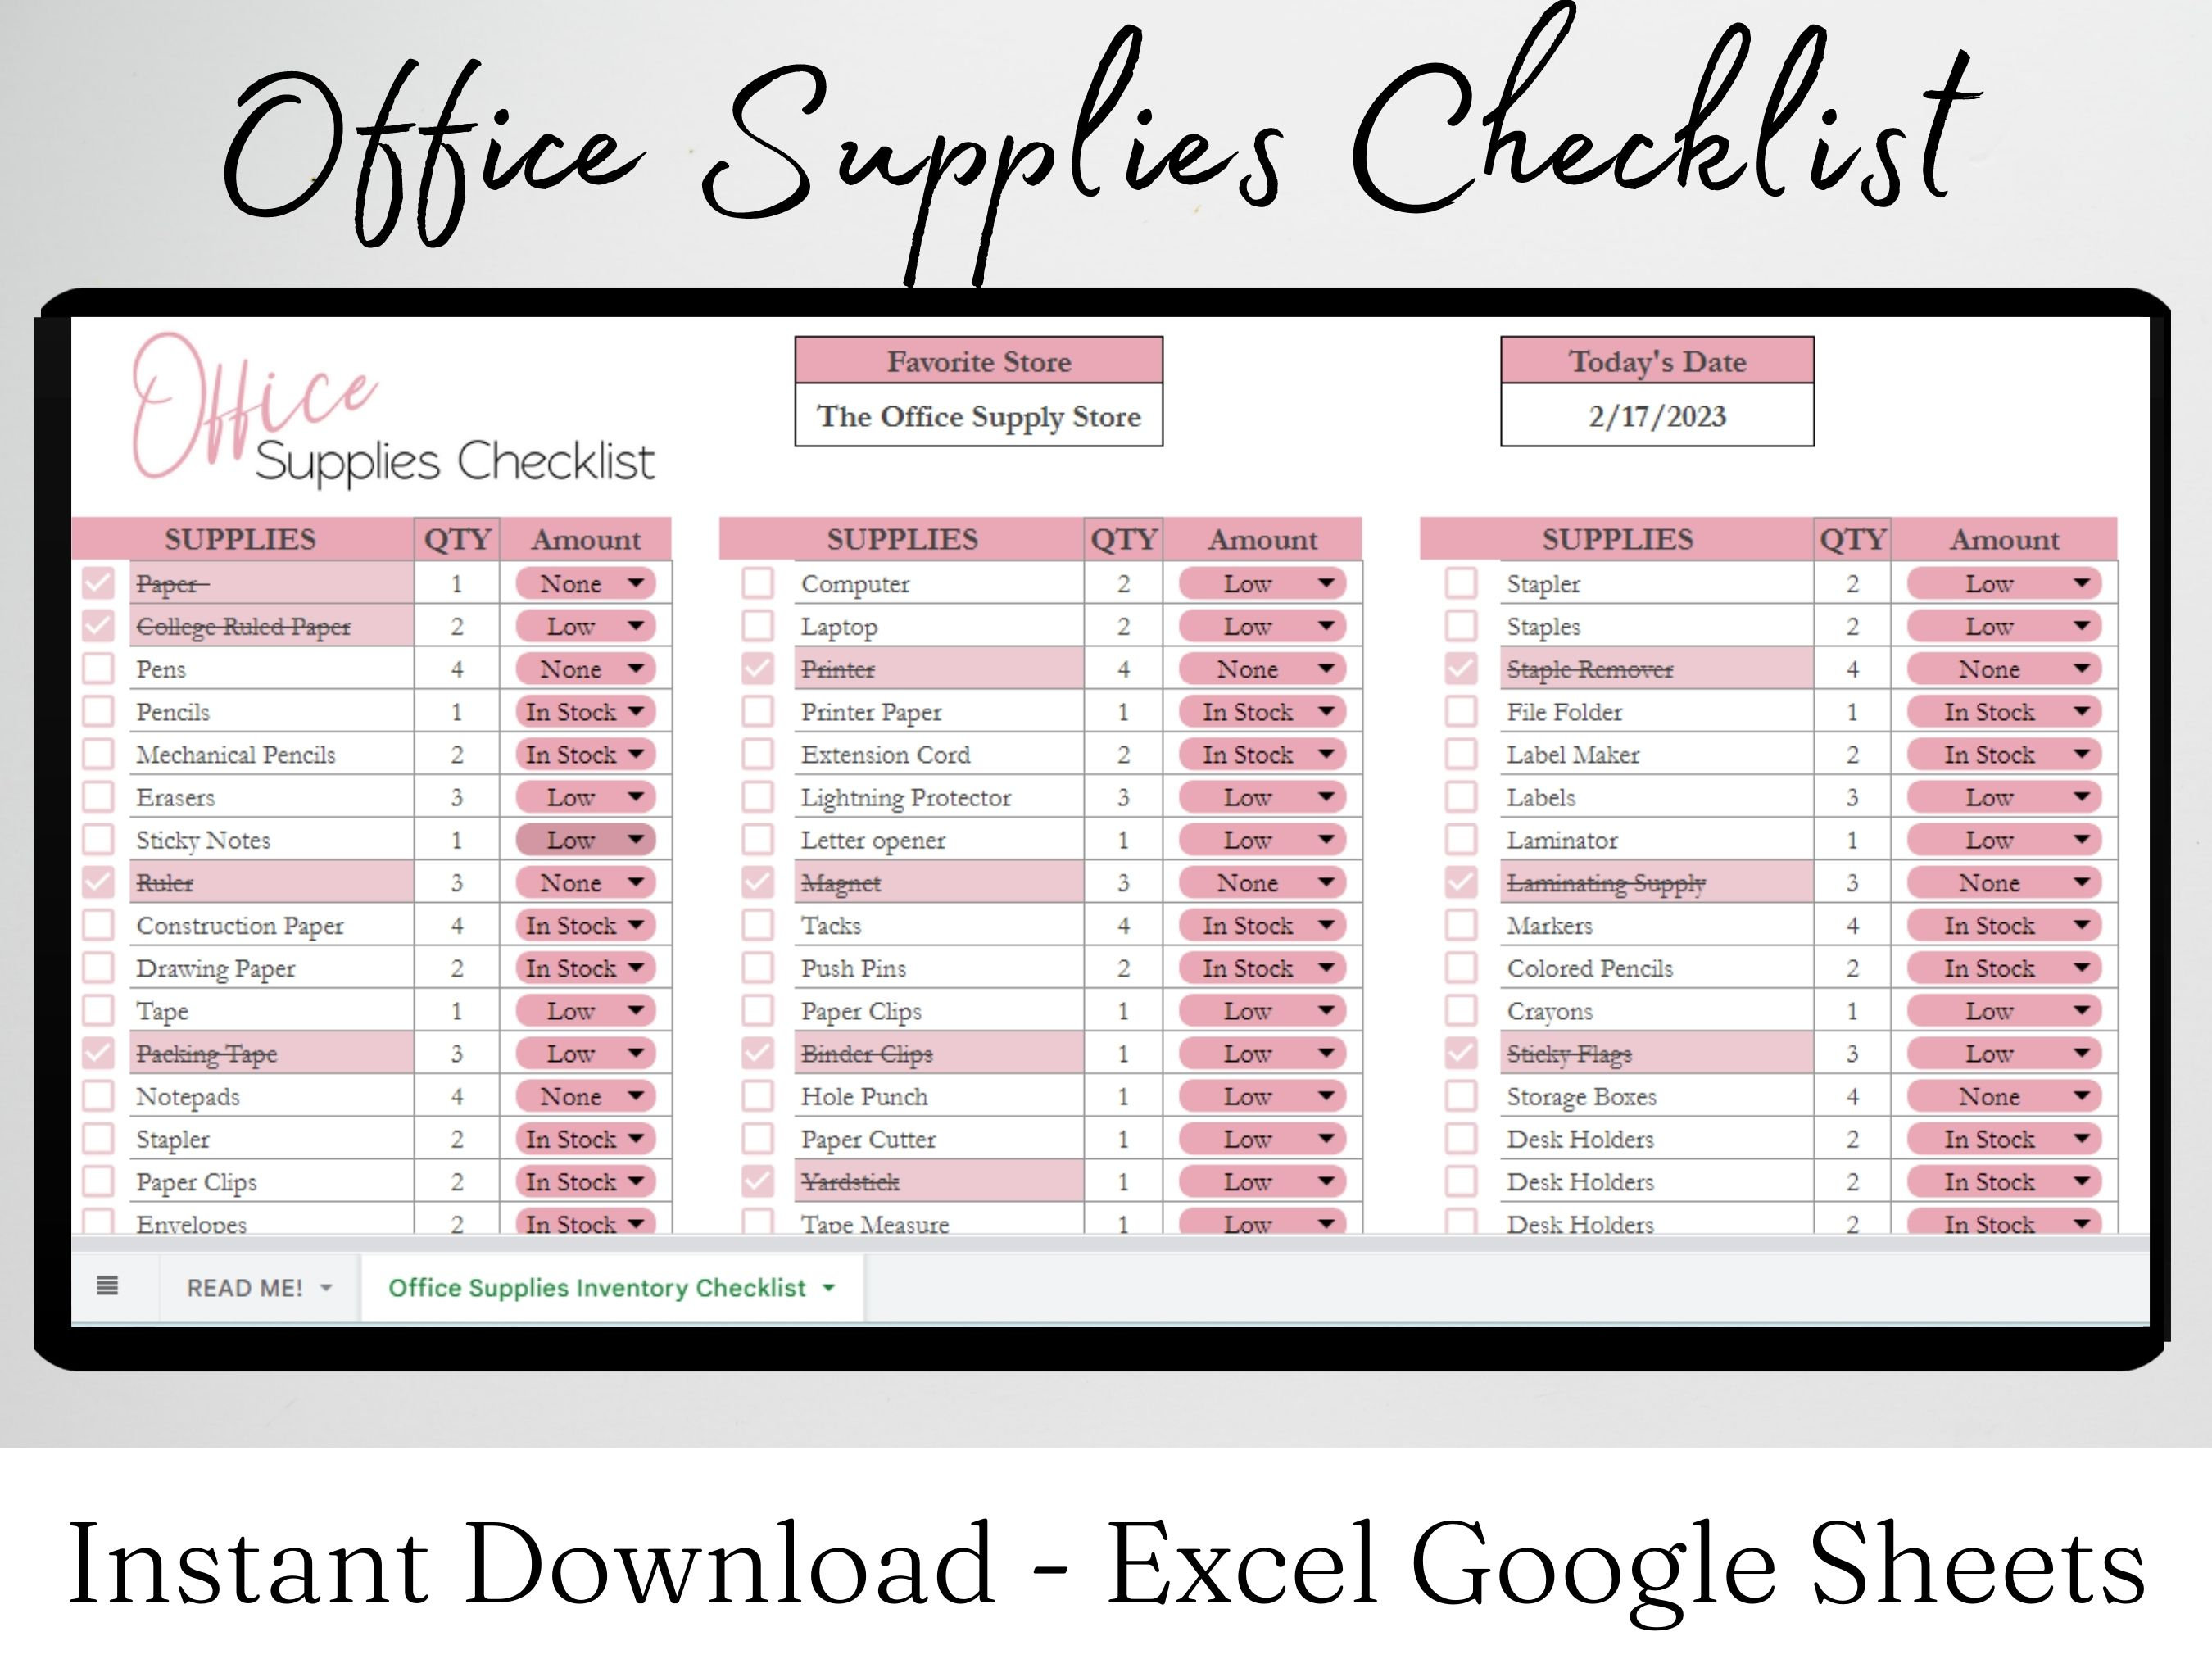 List of essential office supplies